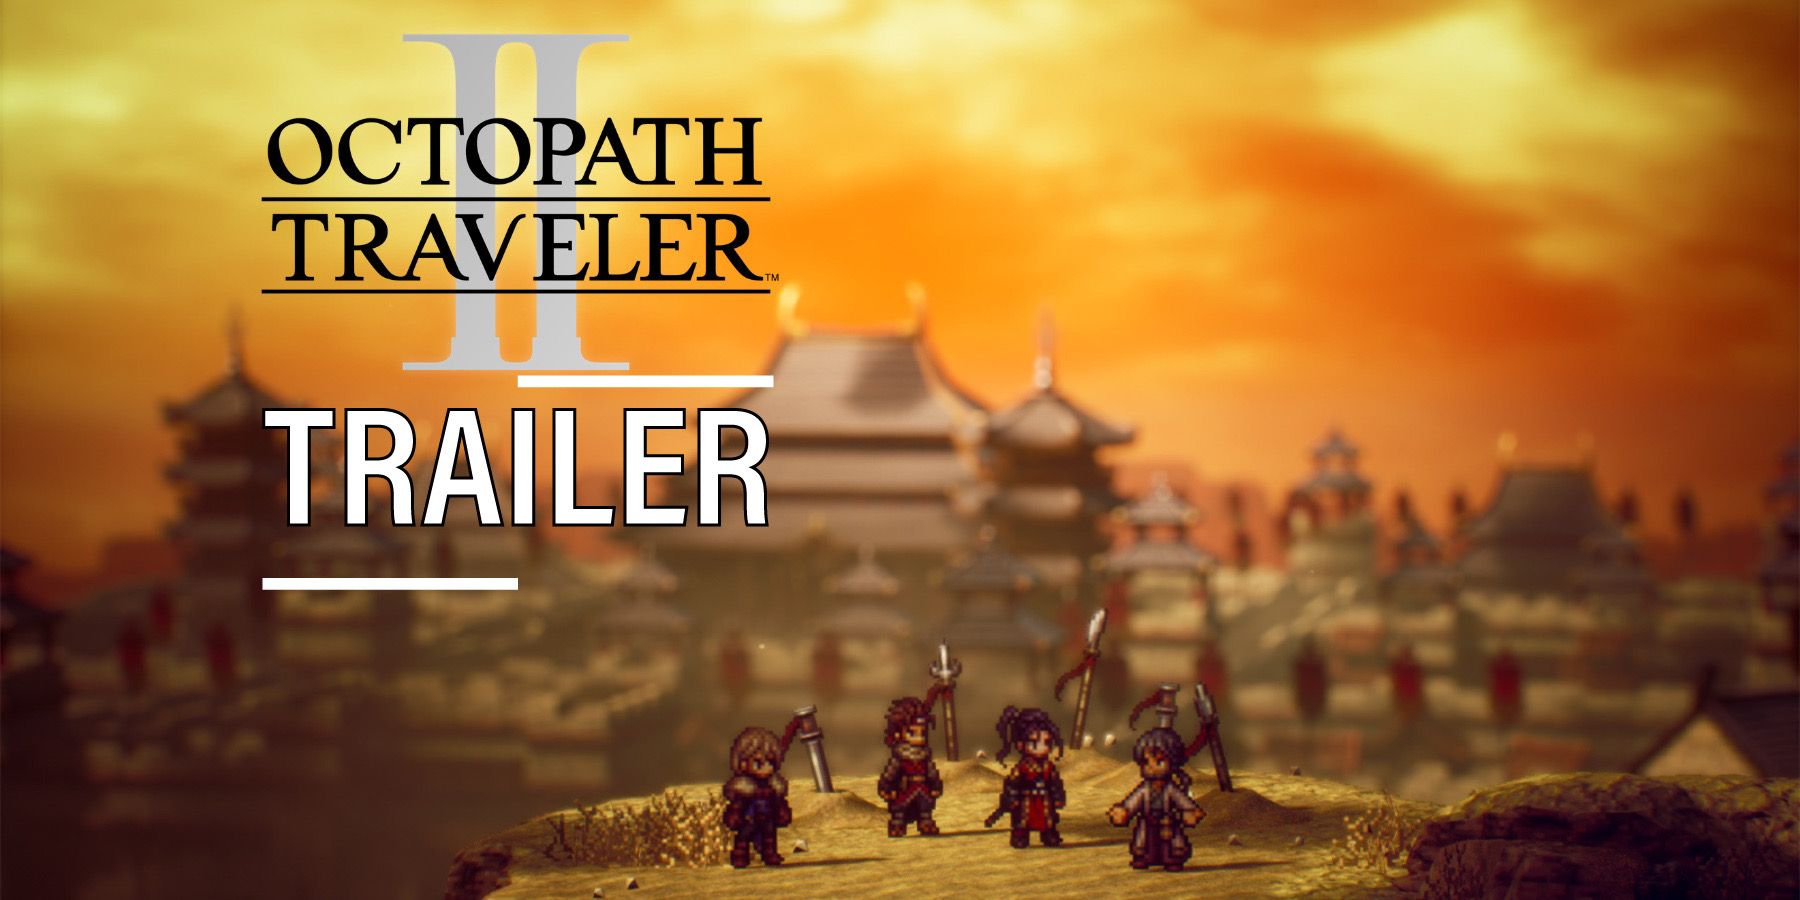 Octopath Traveler 2 January 2023 trailer